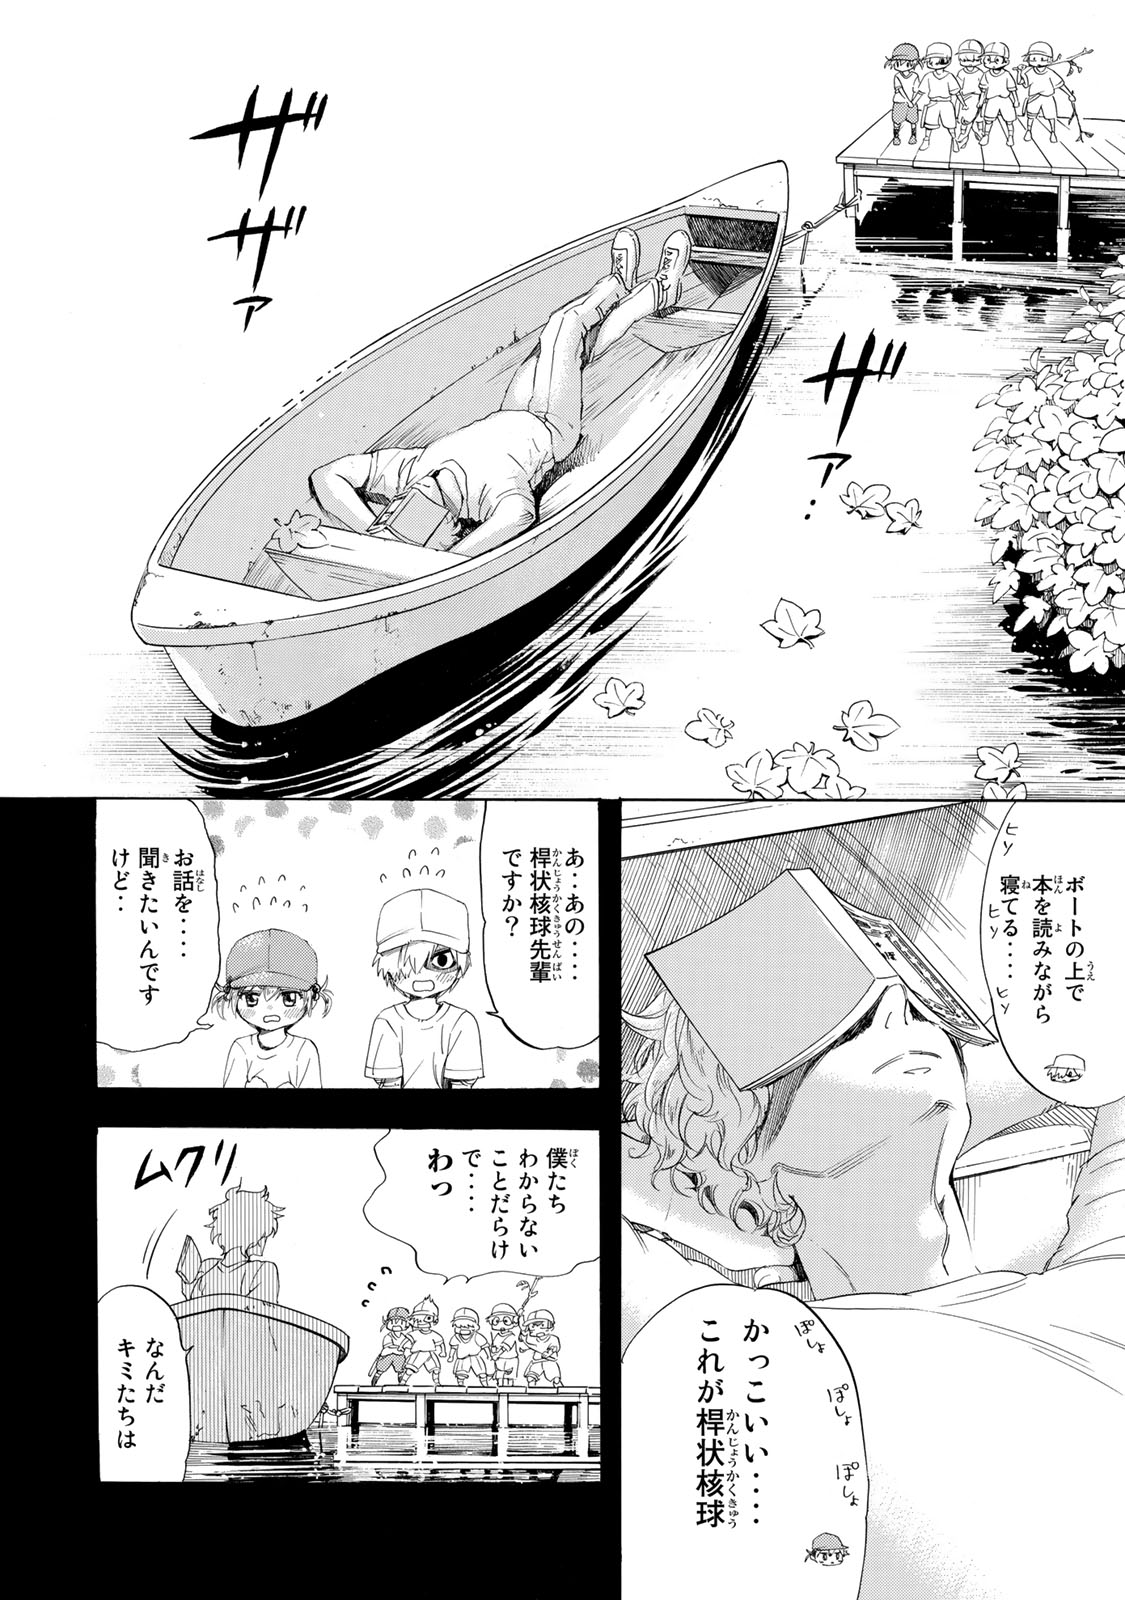 Hataraku Saibou - Chapter 27 - Page 6